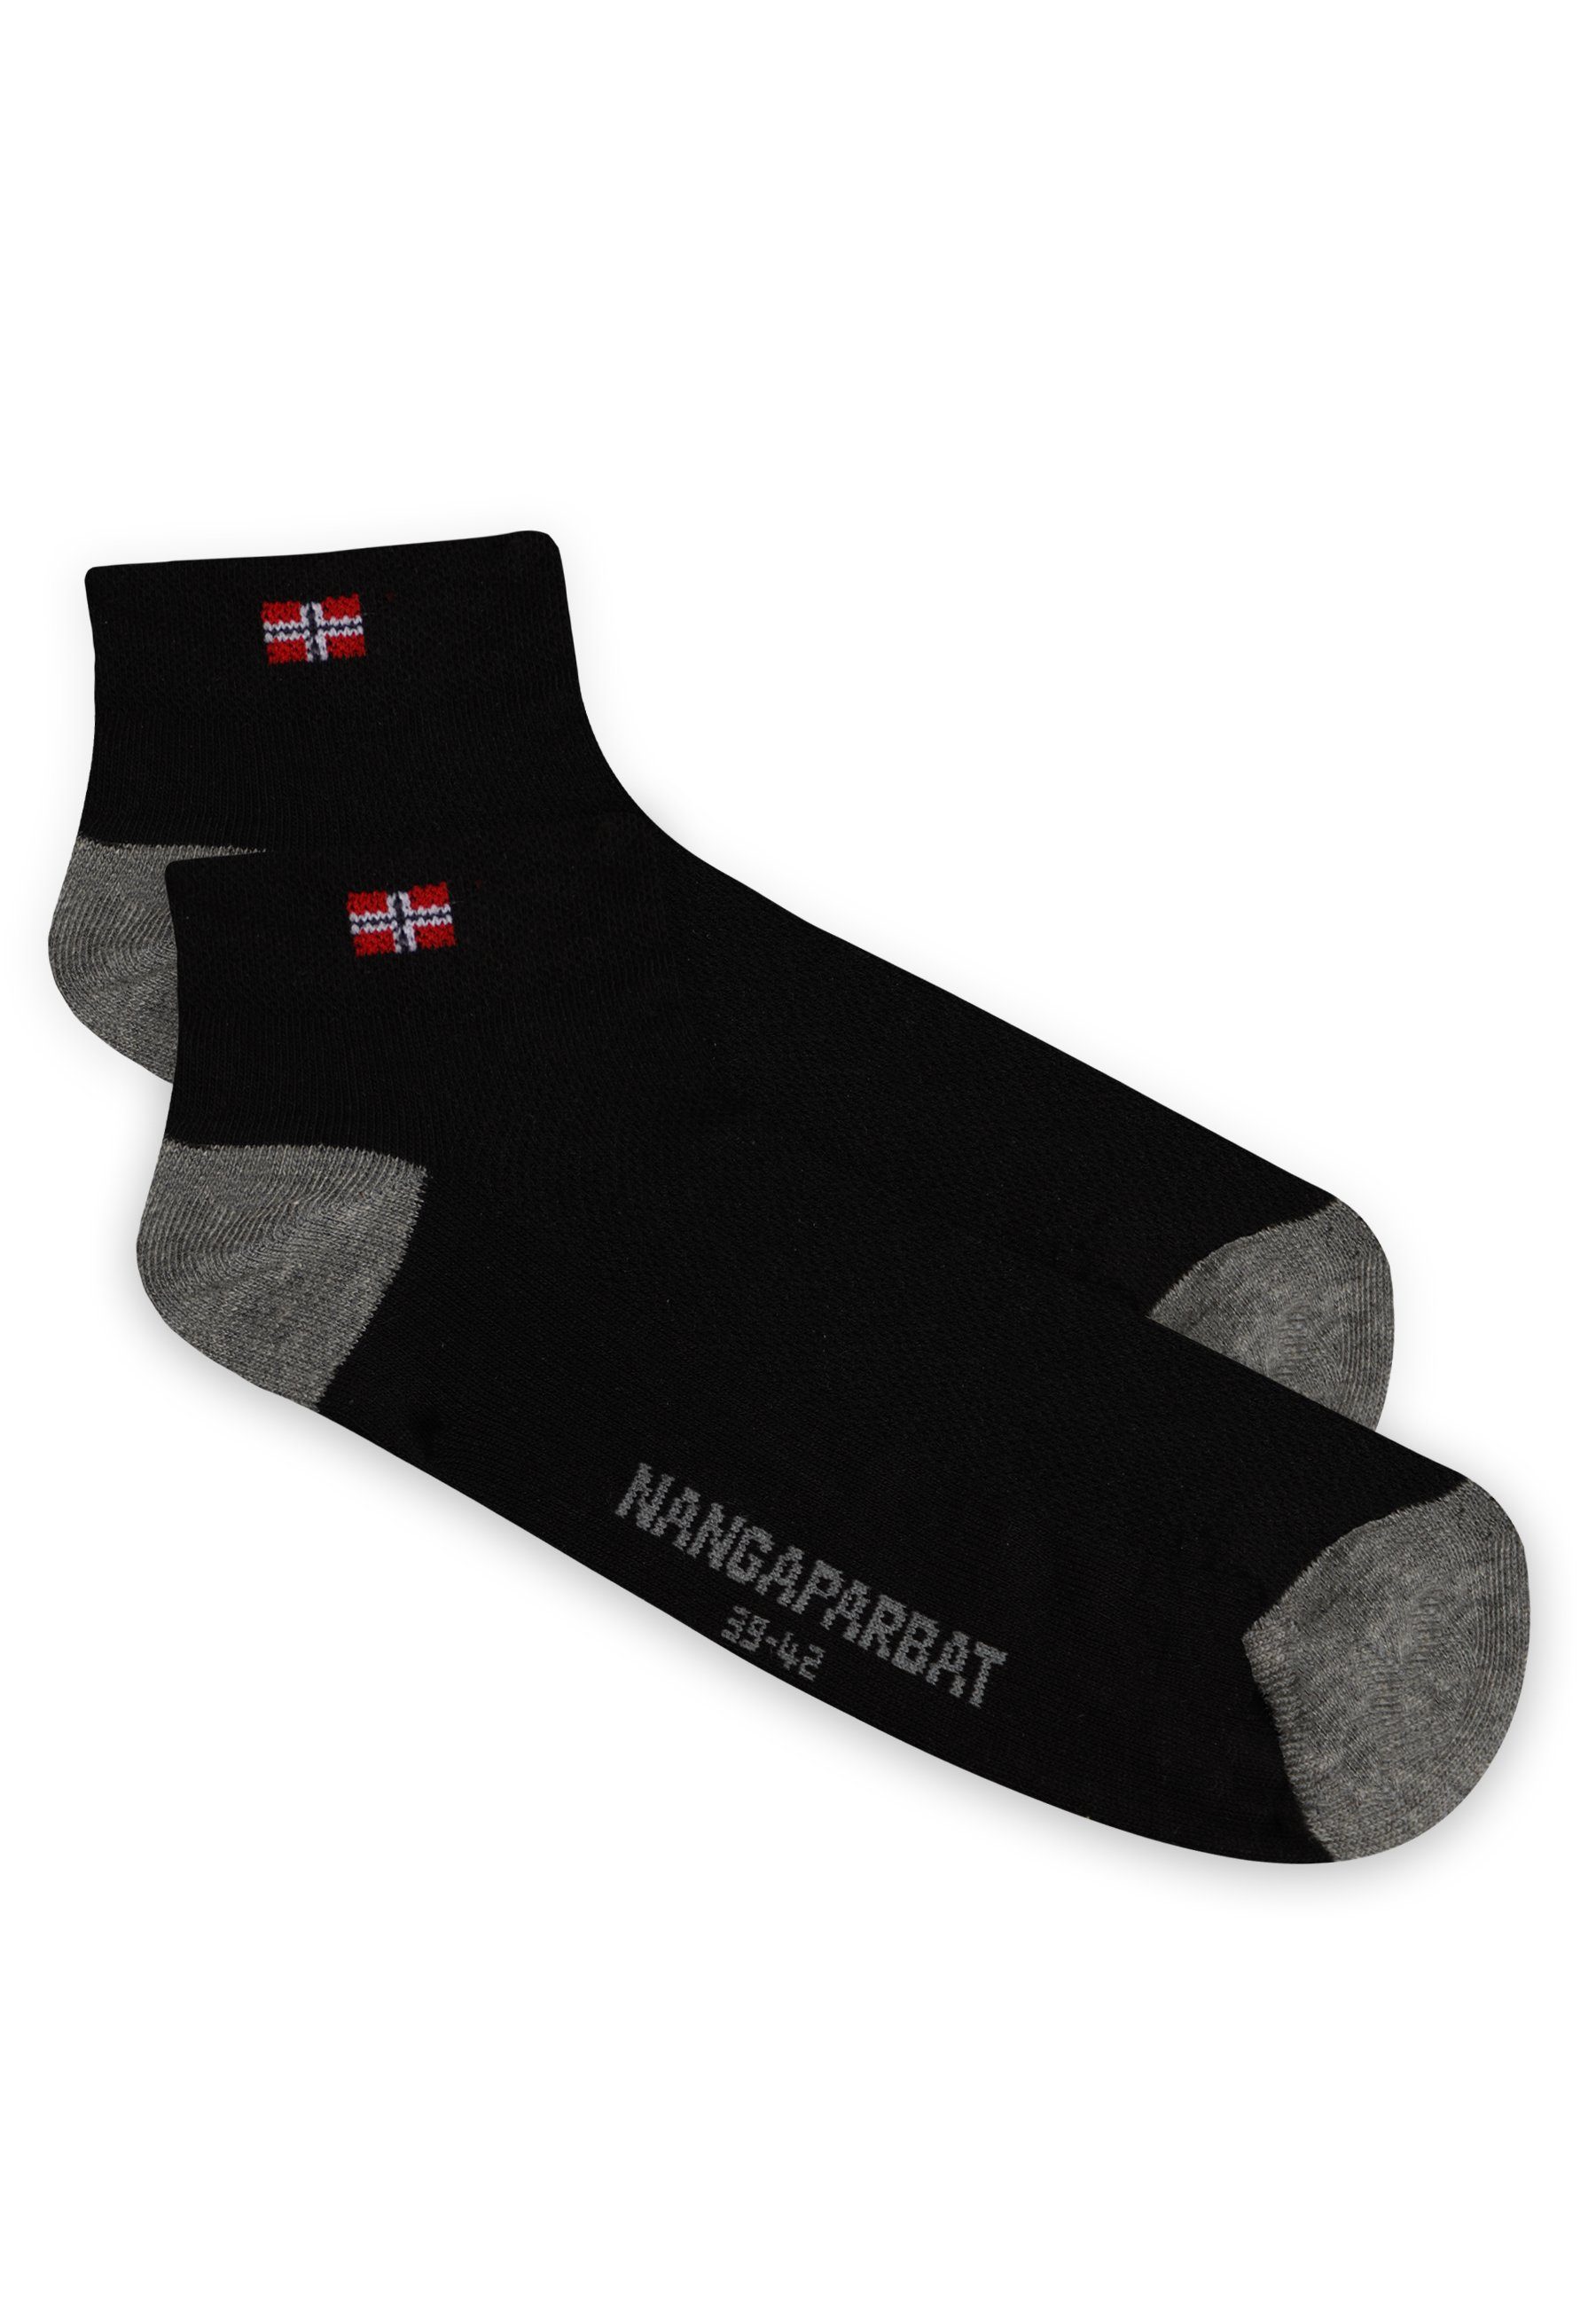 NANGAPARBAT Socken schwarz Trittdämpfung mit komfortabler